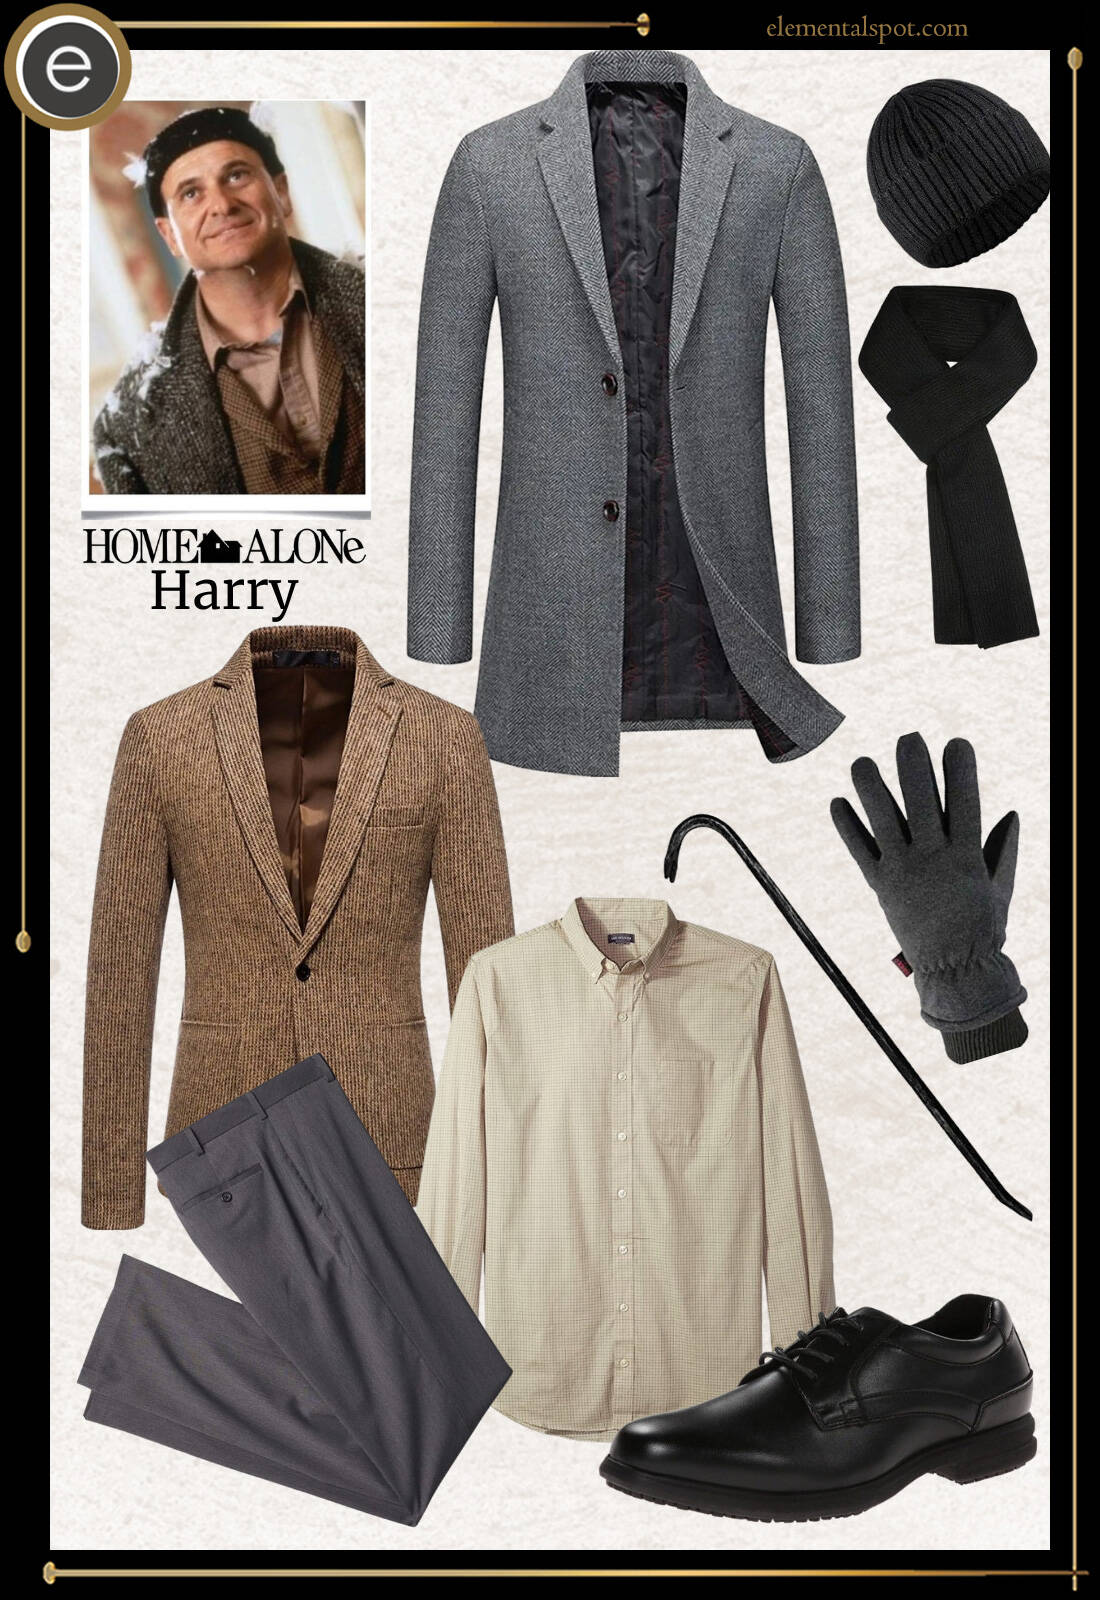 Dress Up Like Harry from Home Alone - Elemental Spot